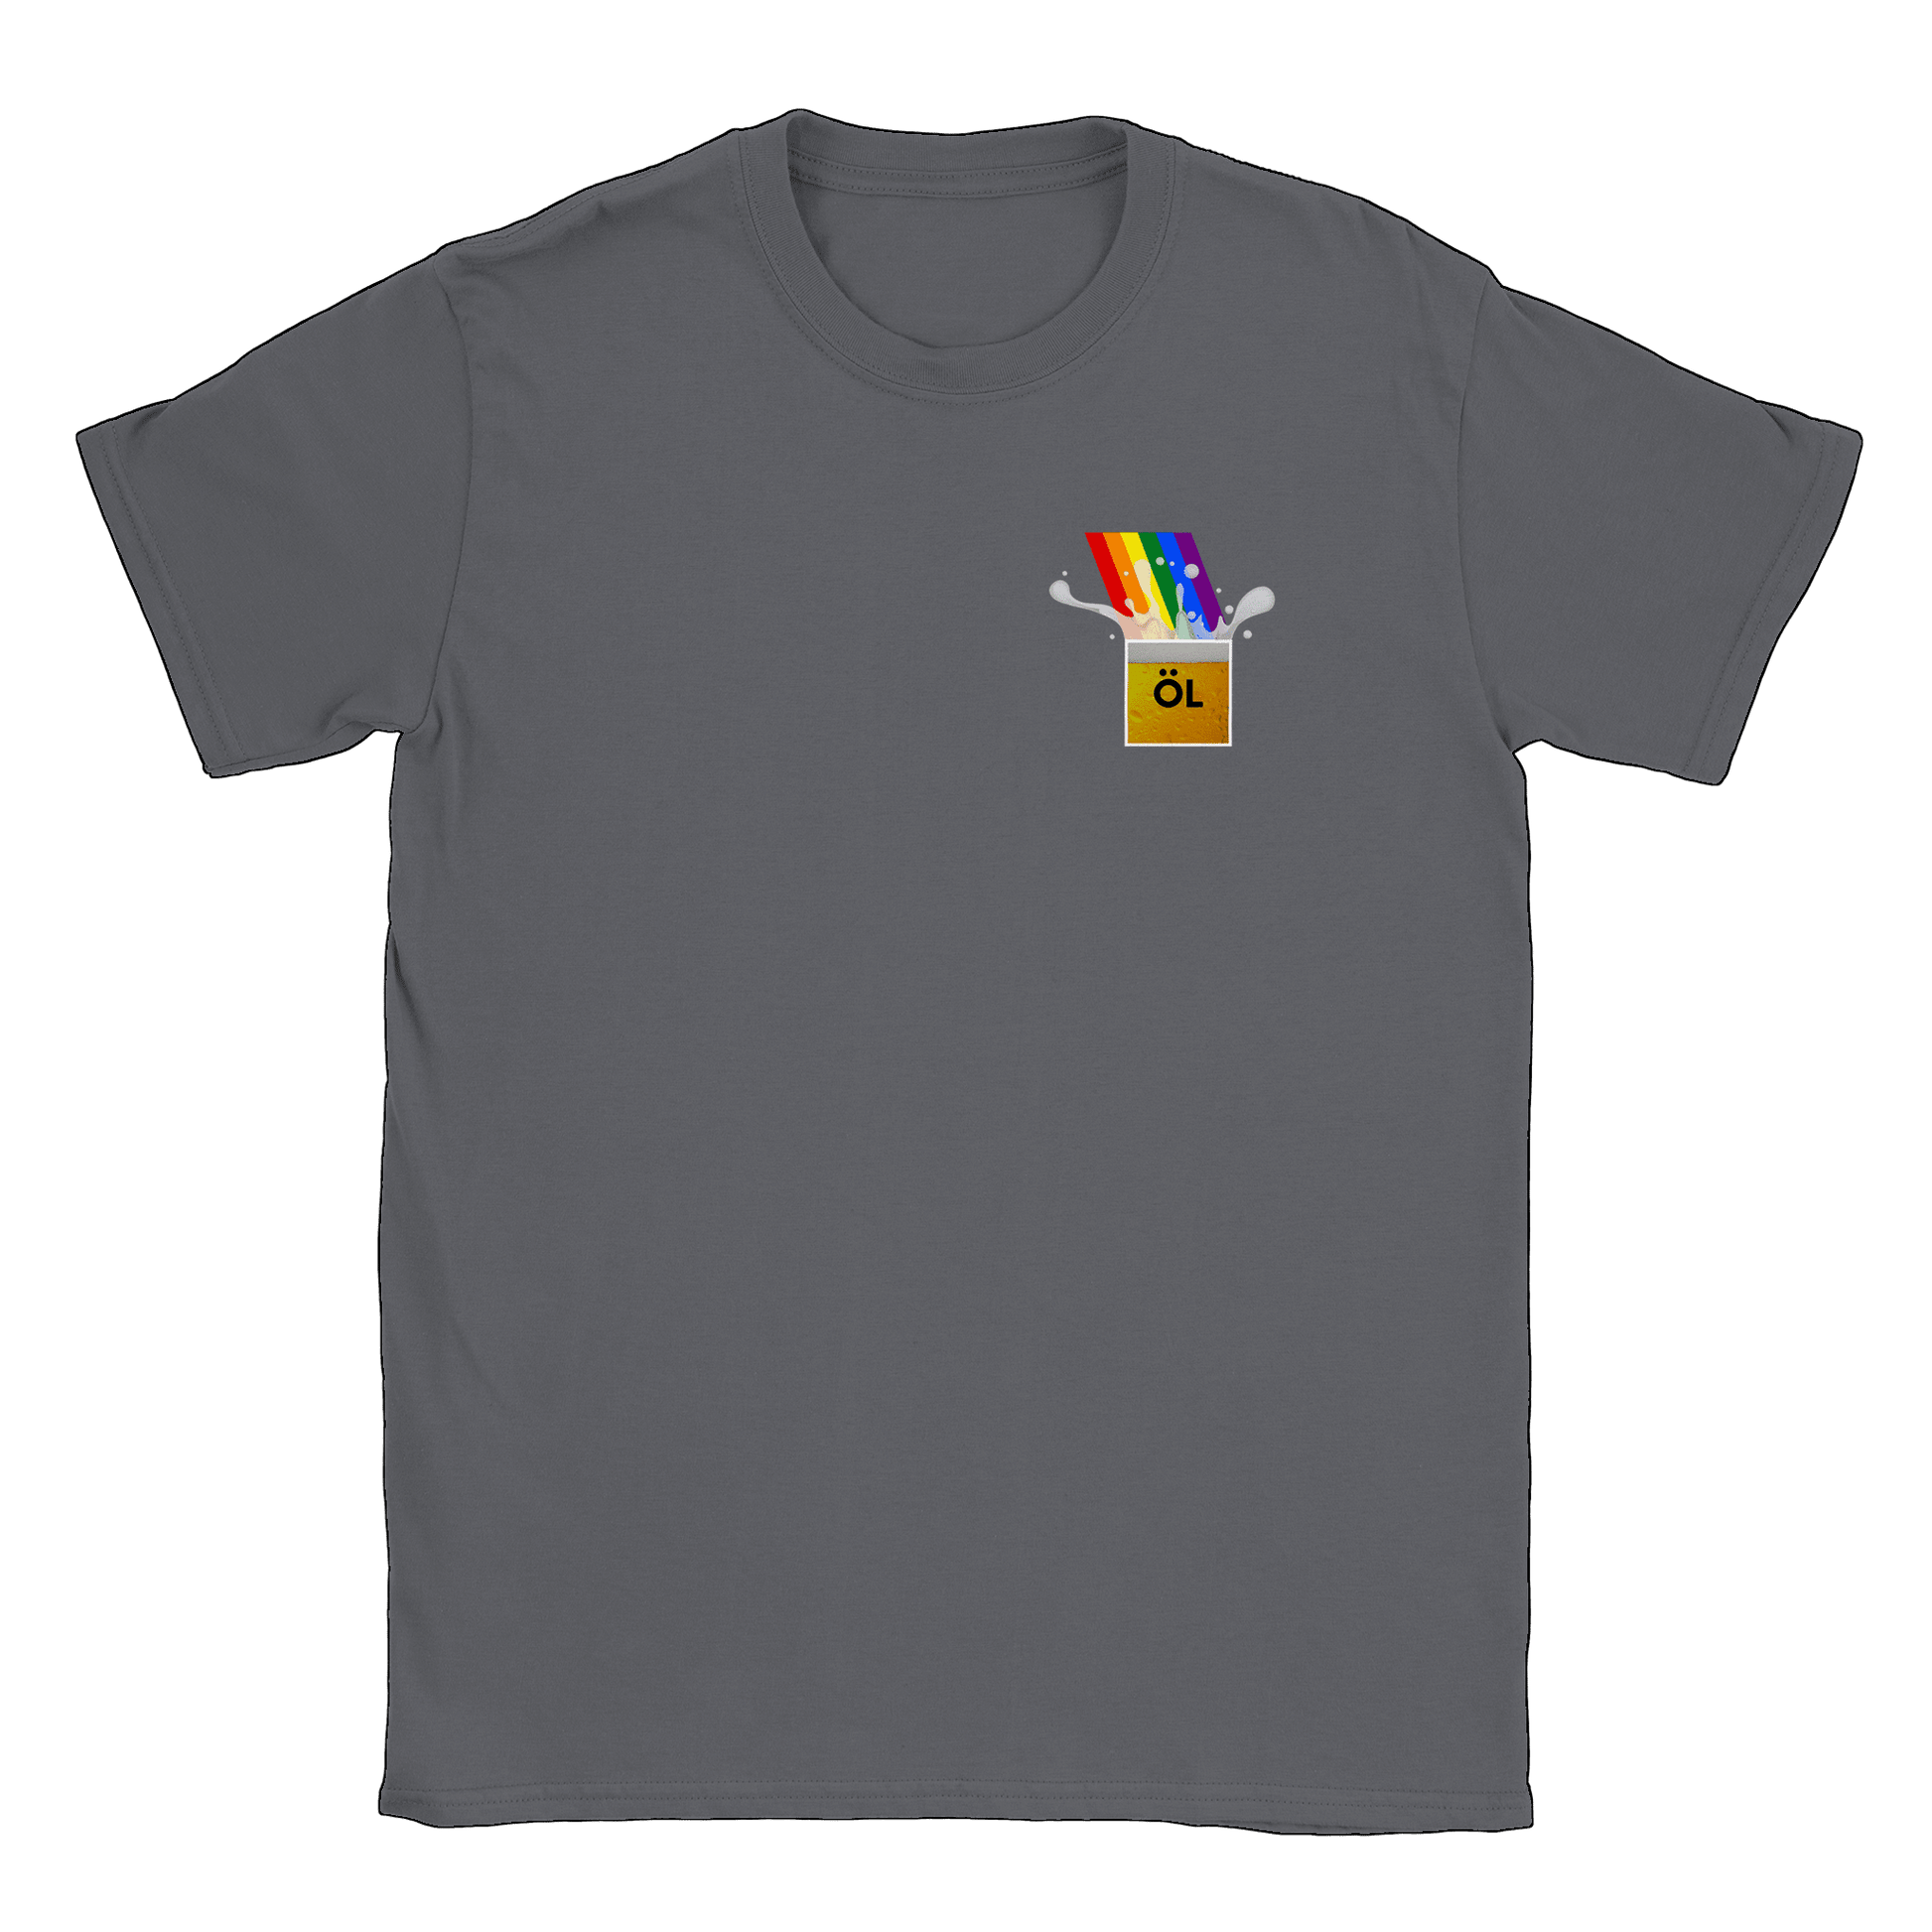 Öl vid regnbågens slut - T-shirt Charcoal